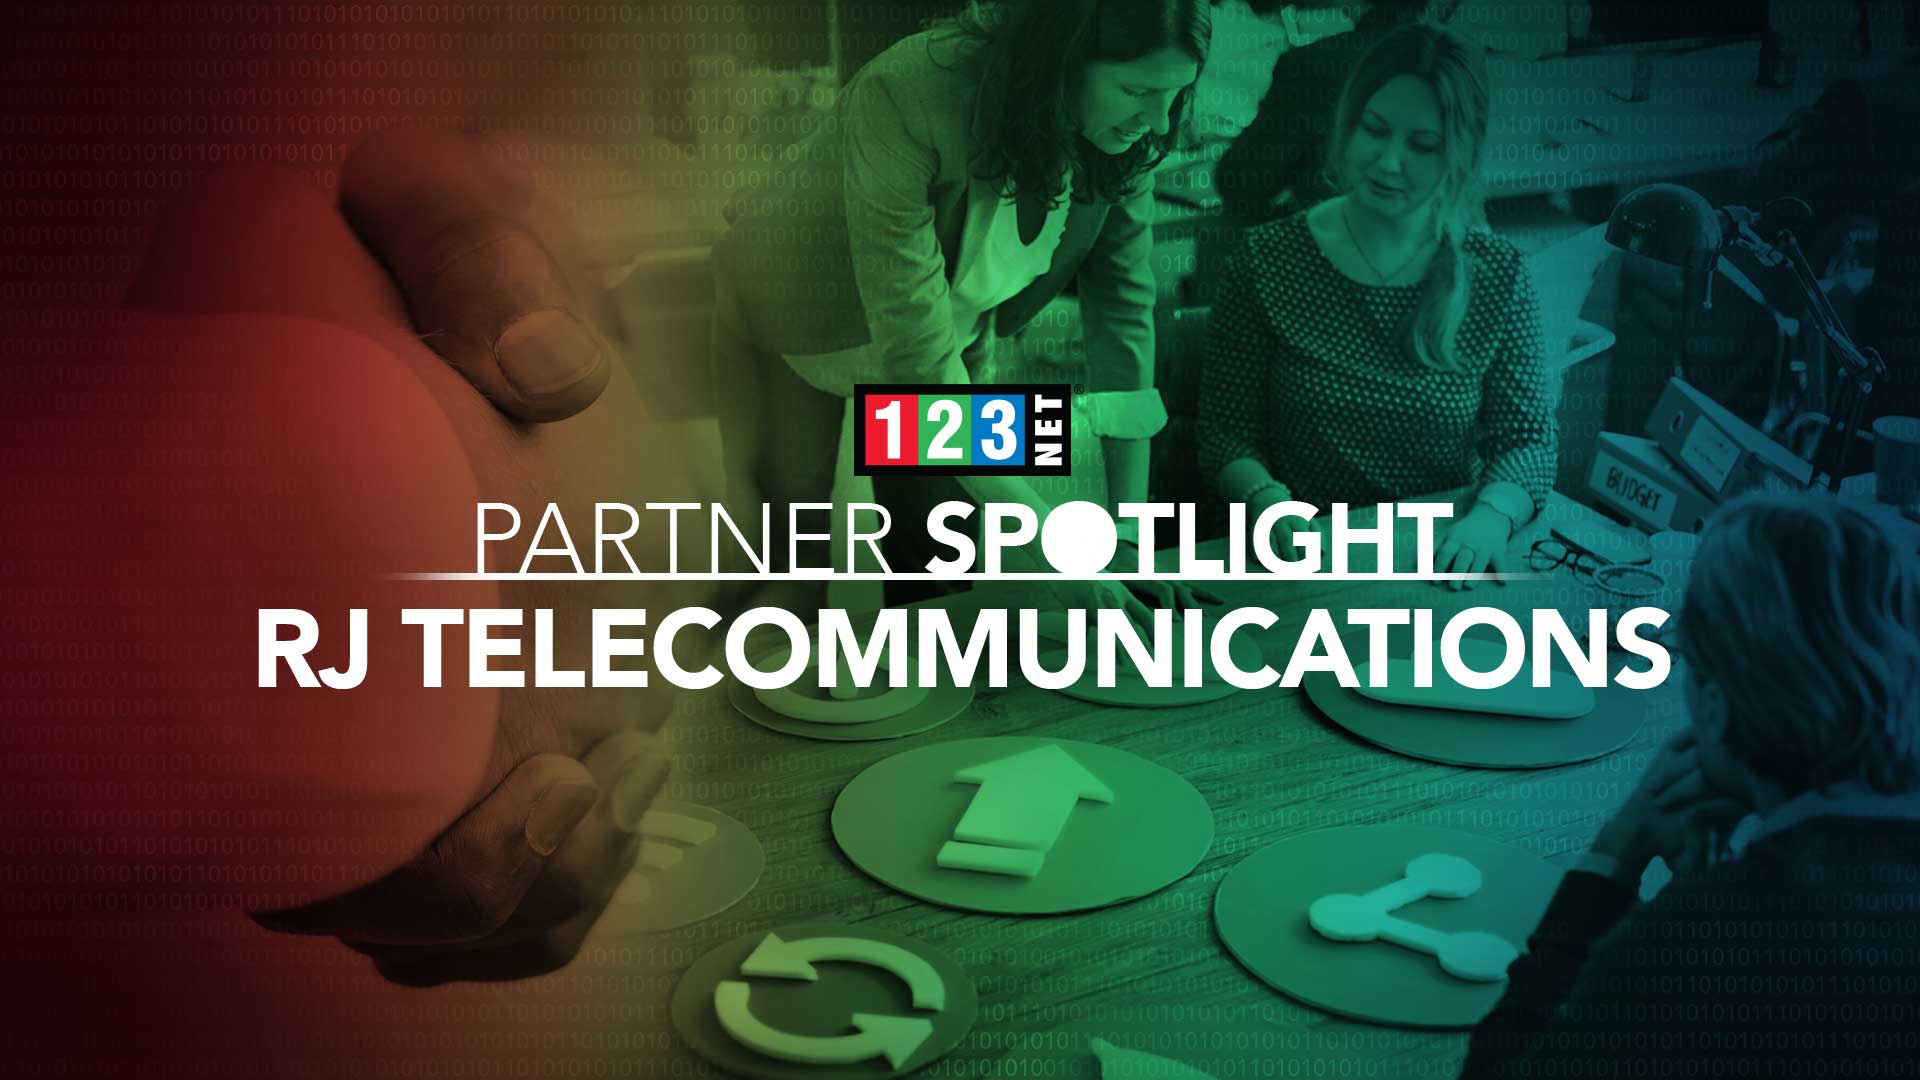 RJ Telecommunications partners with 123NET